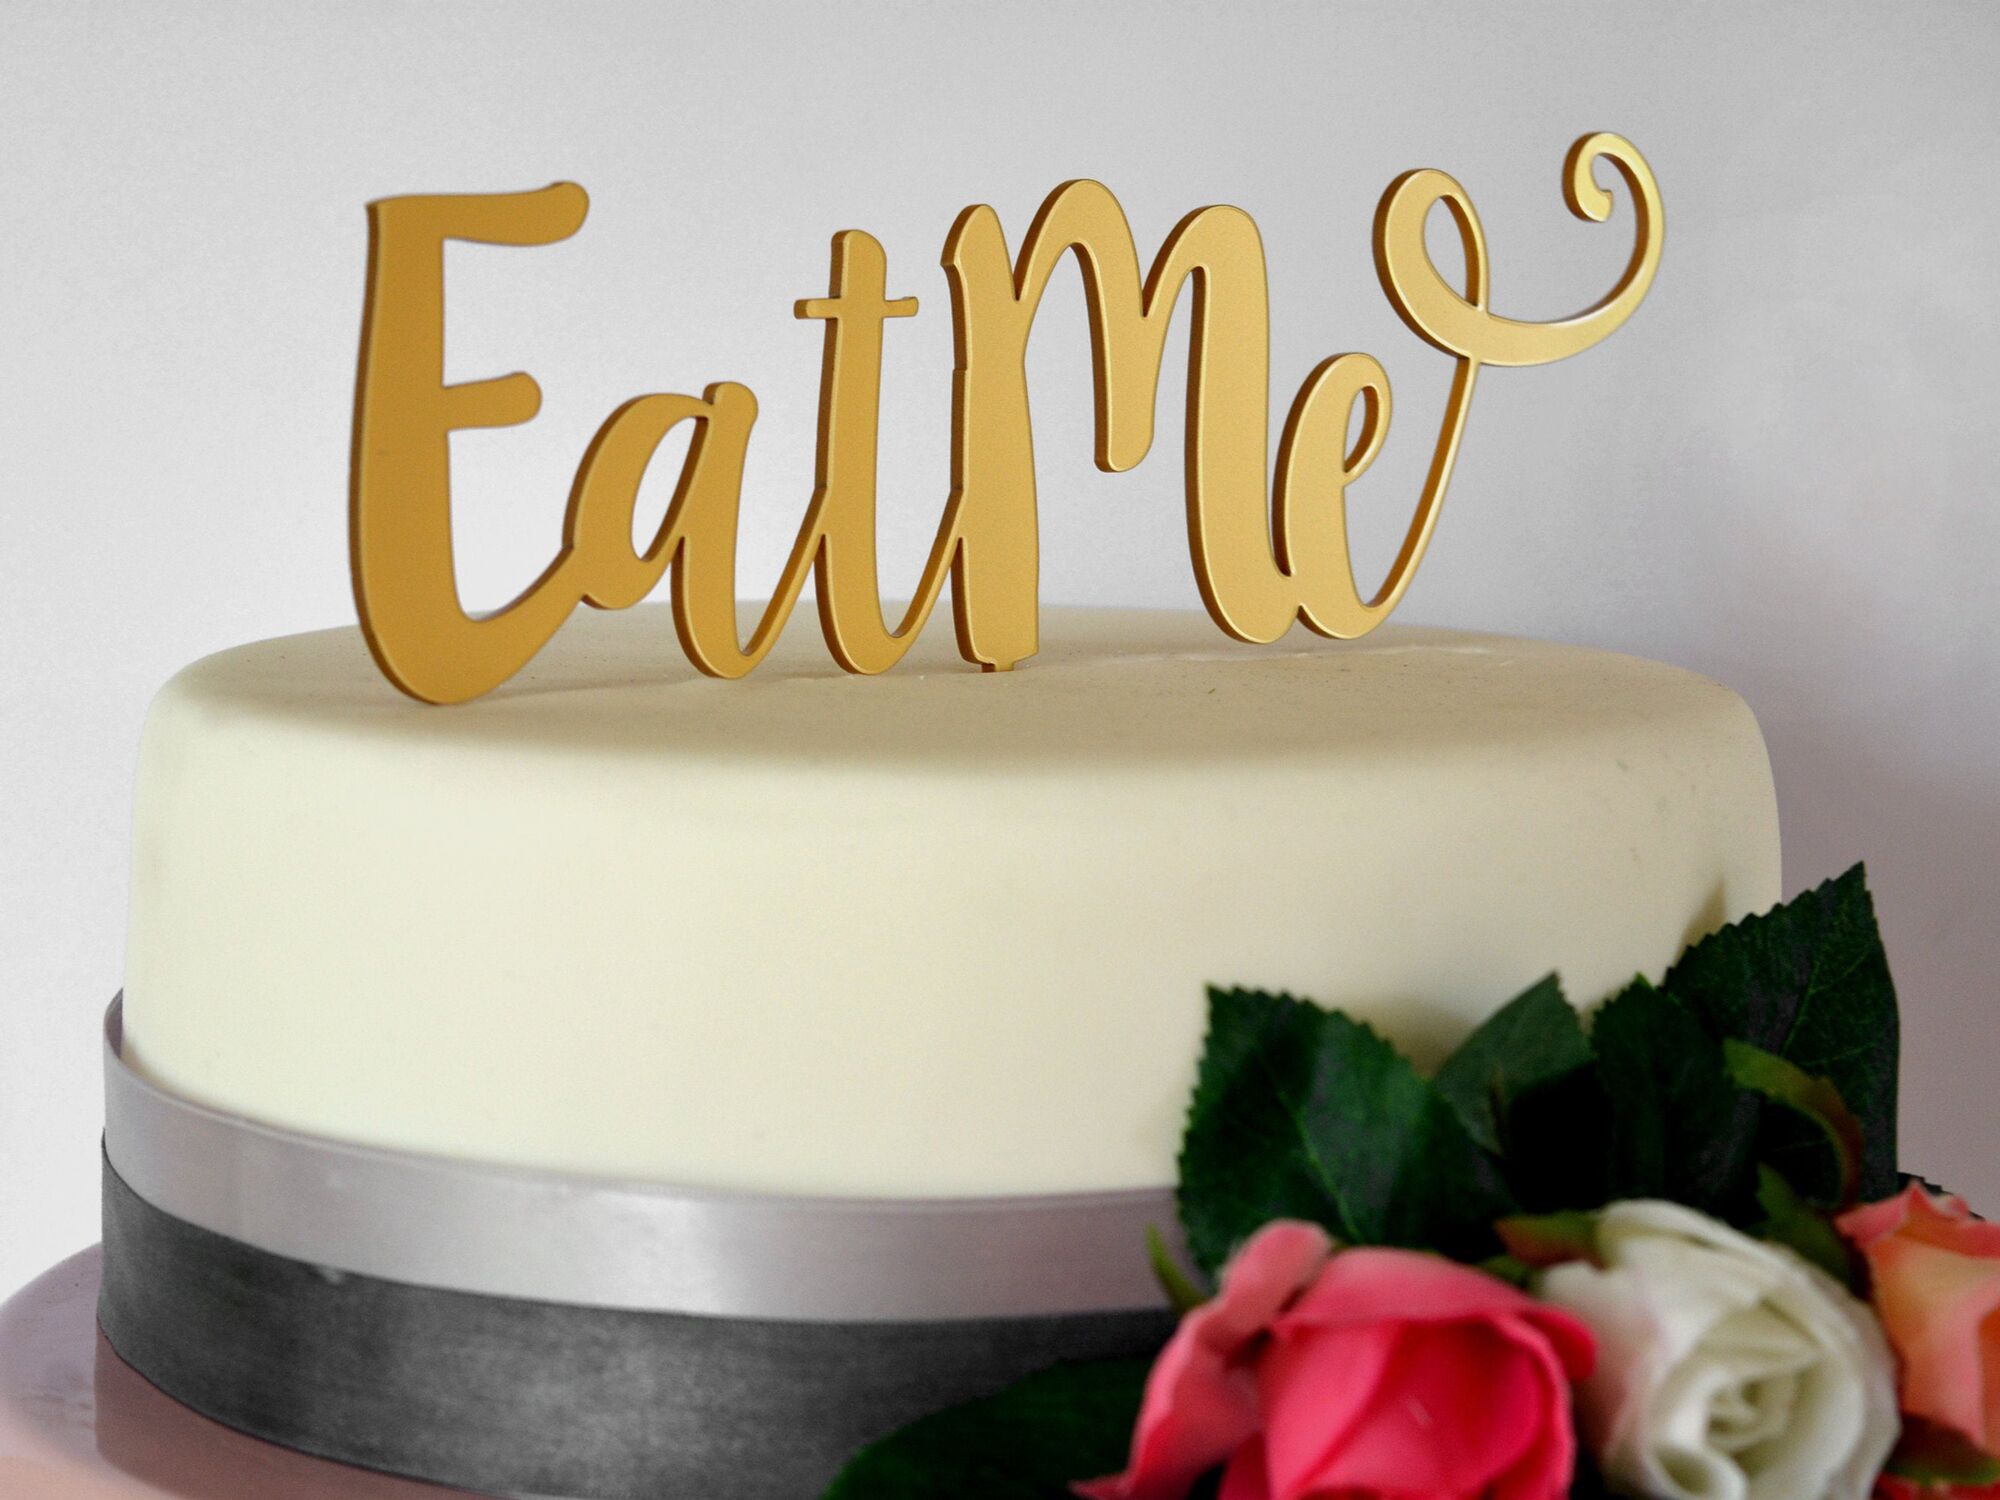 Eat Me gold wedding cake topper